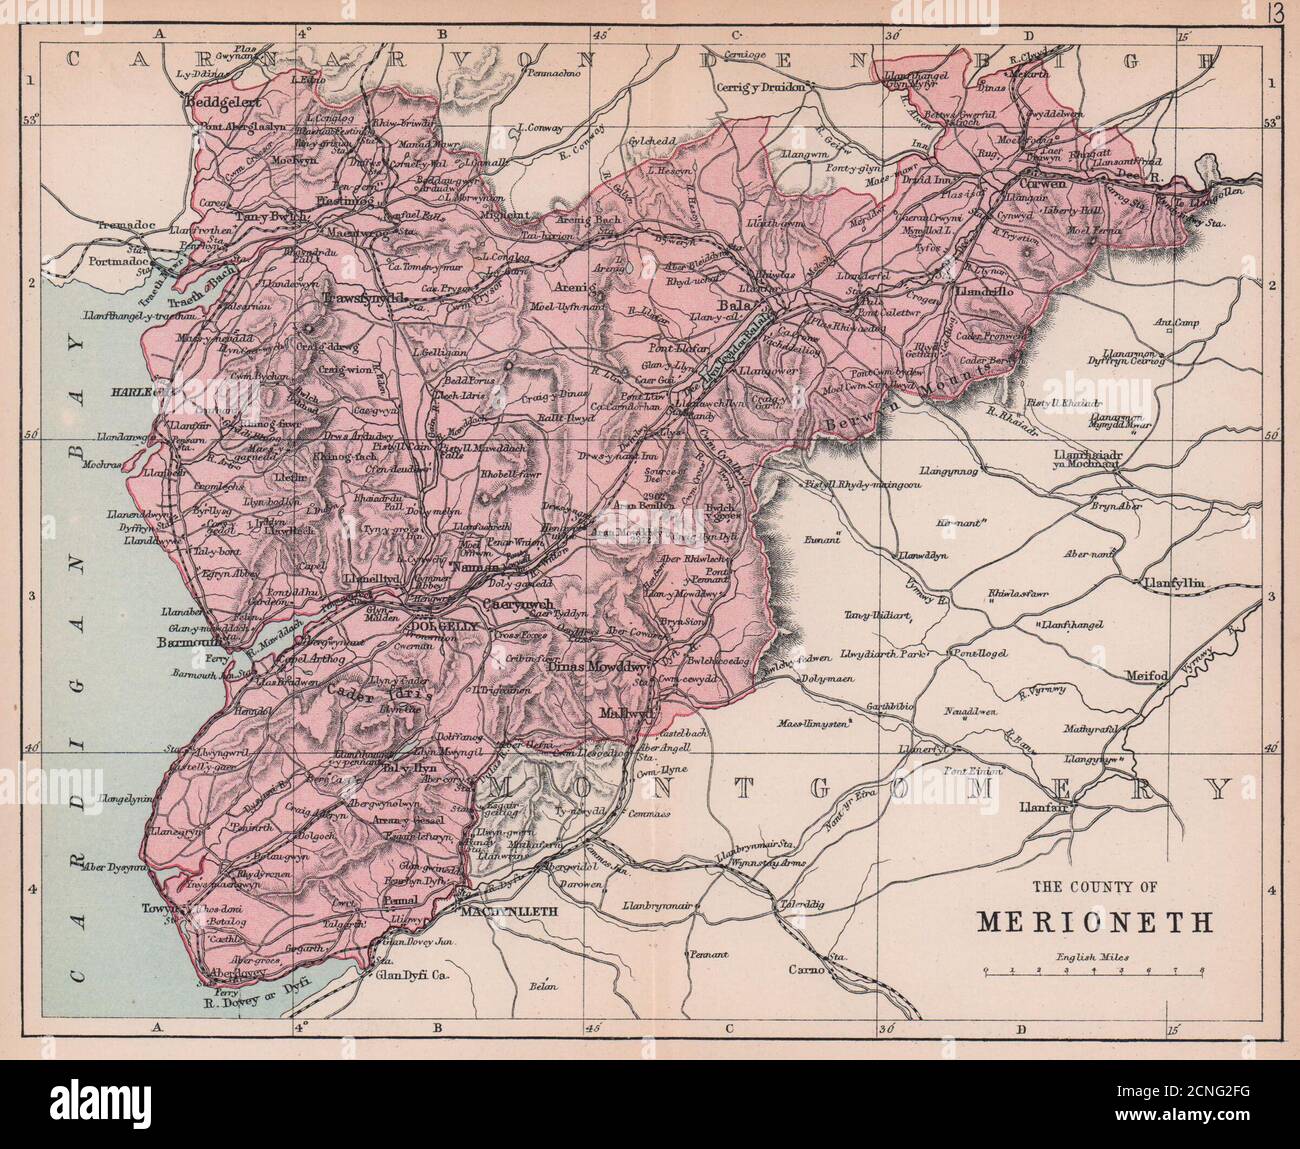 MERIONETHSHIRE 'County of Merioneth' Barmouth Tywyn Wales BARTHOLOMEW 1882 map Stock Photo